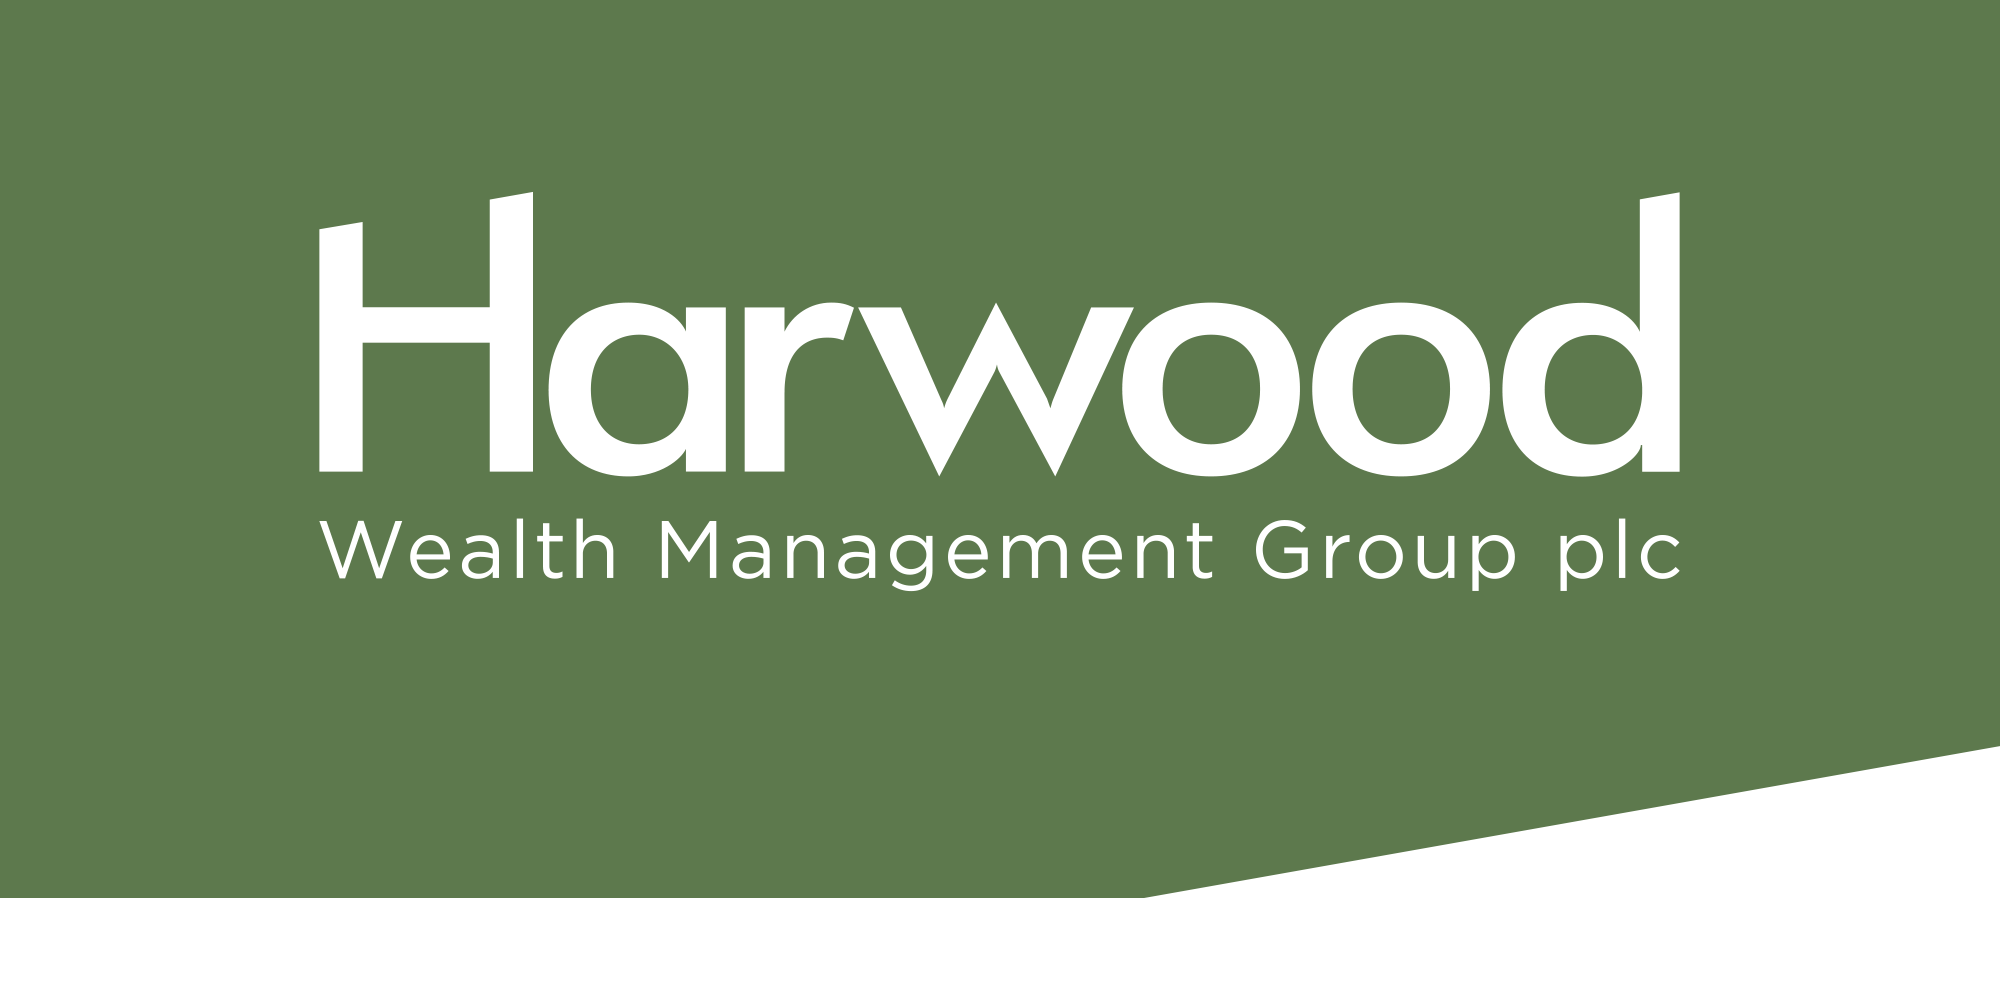 Harwood Wealth Management Group Plc